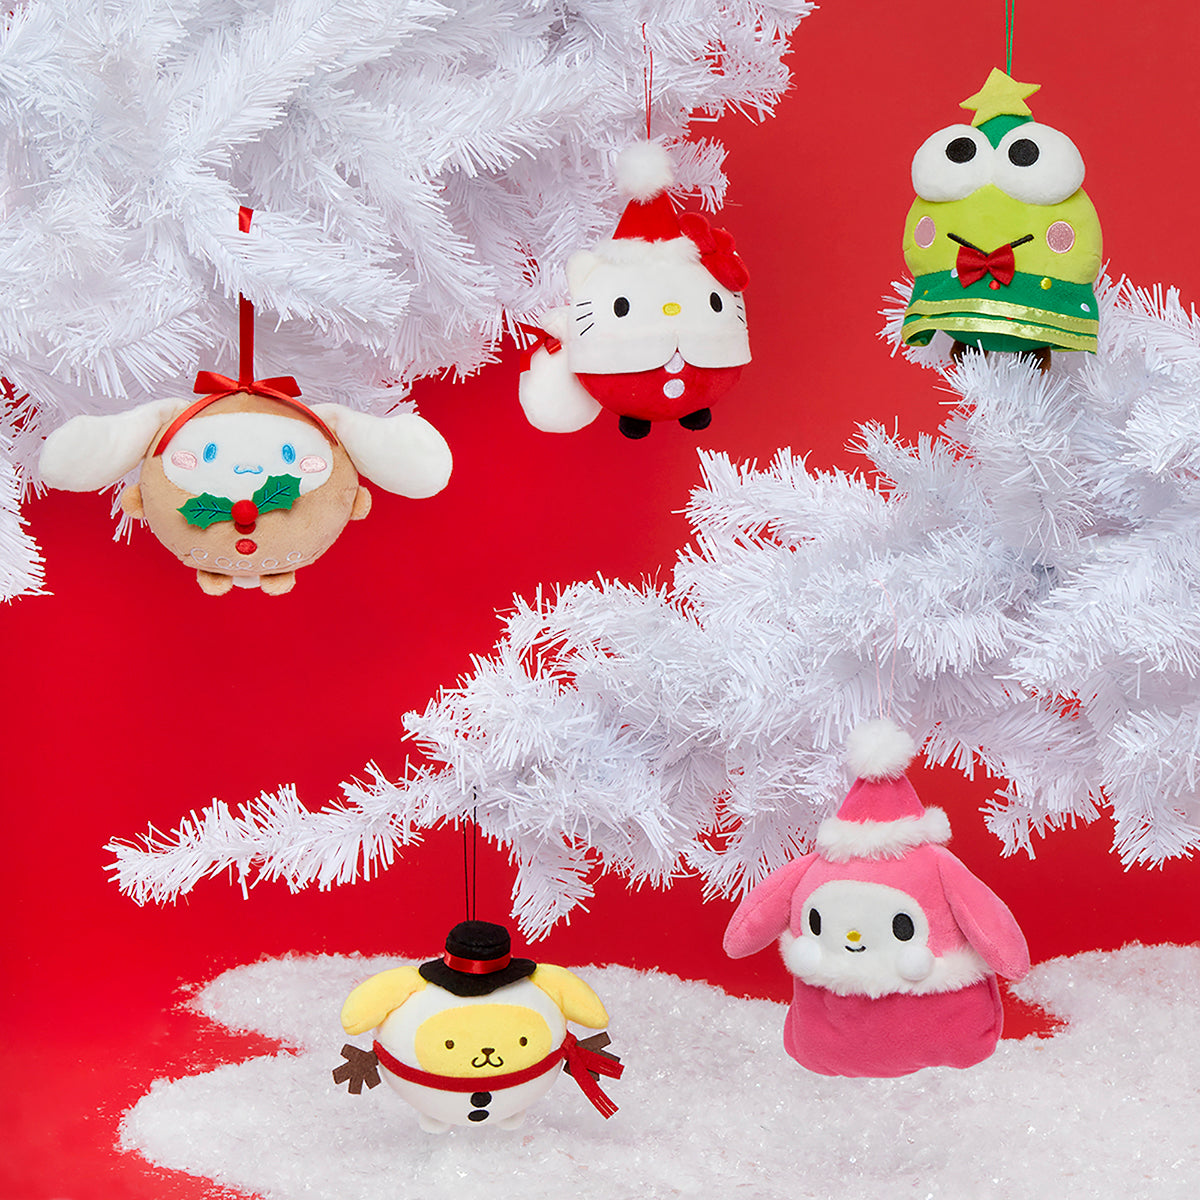 Hello Kitty & Friends 6-pc Holiday Ornament Set Plush HUNET GLOBAL CREATIONS INC   